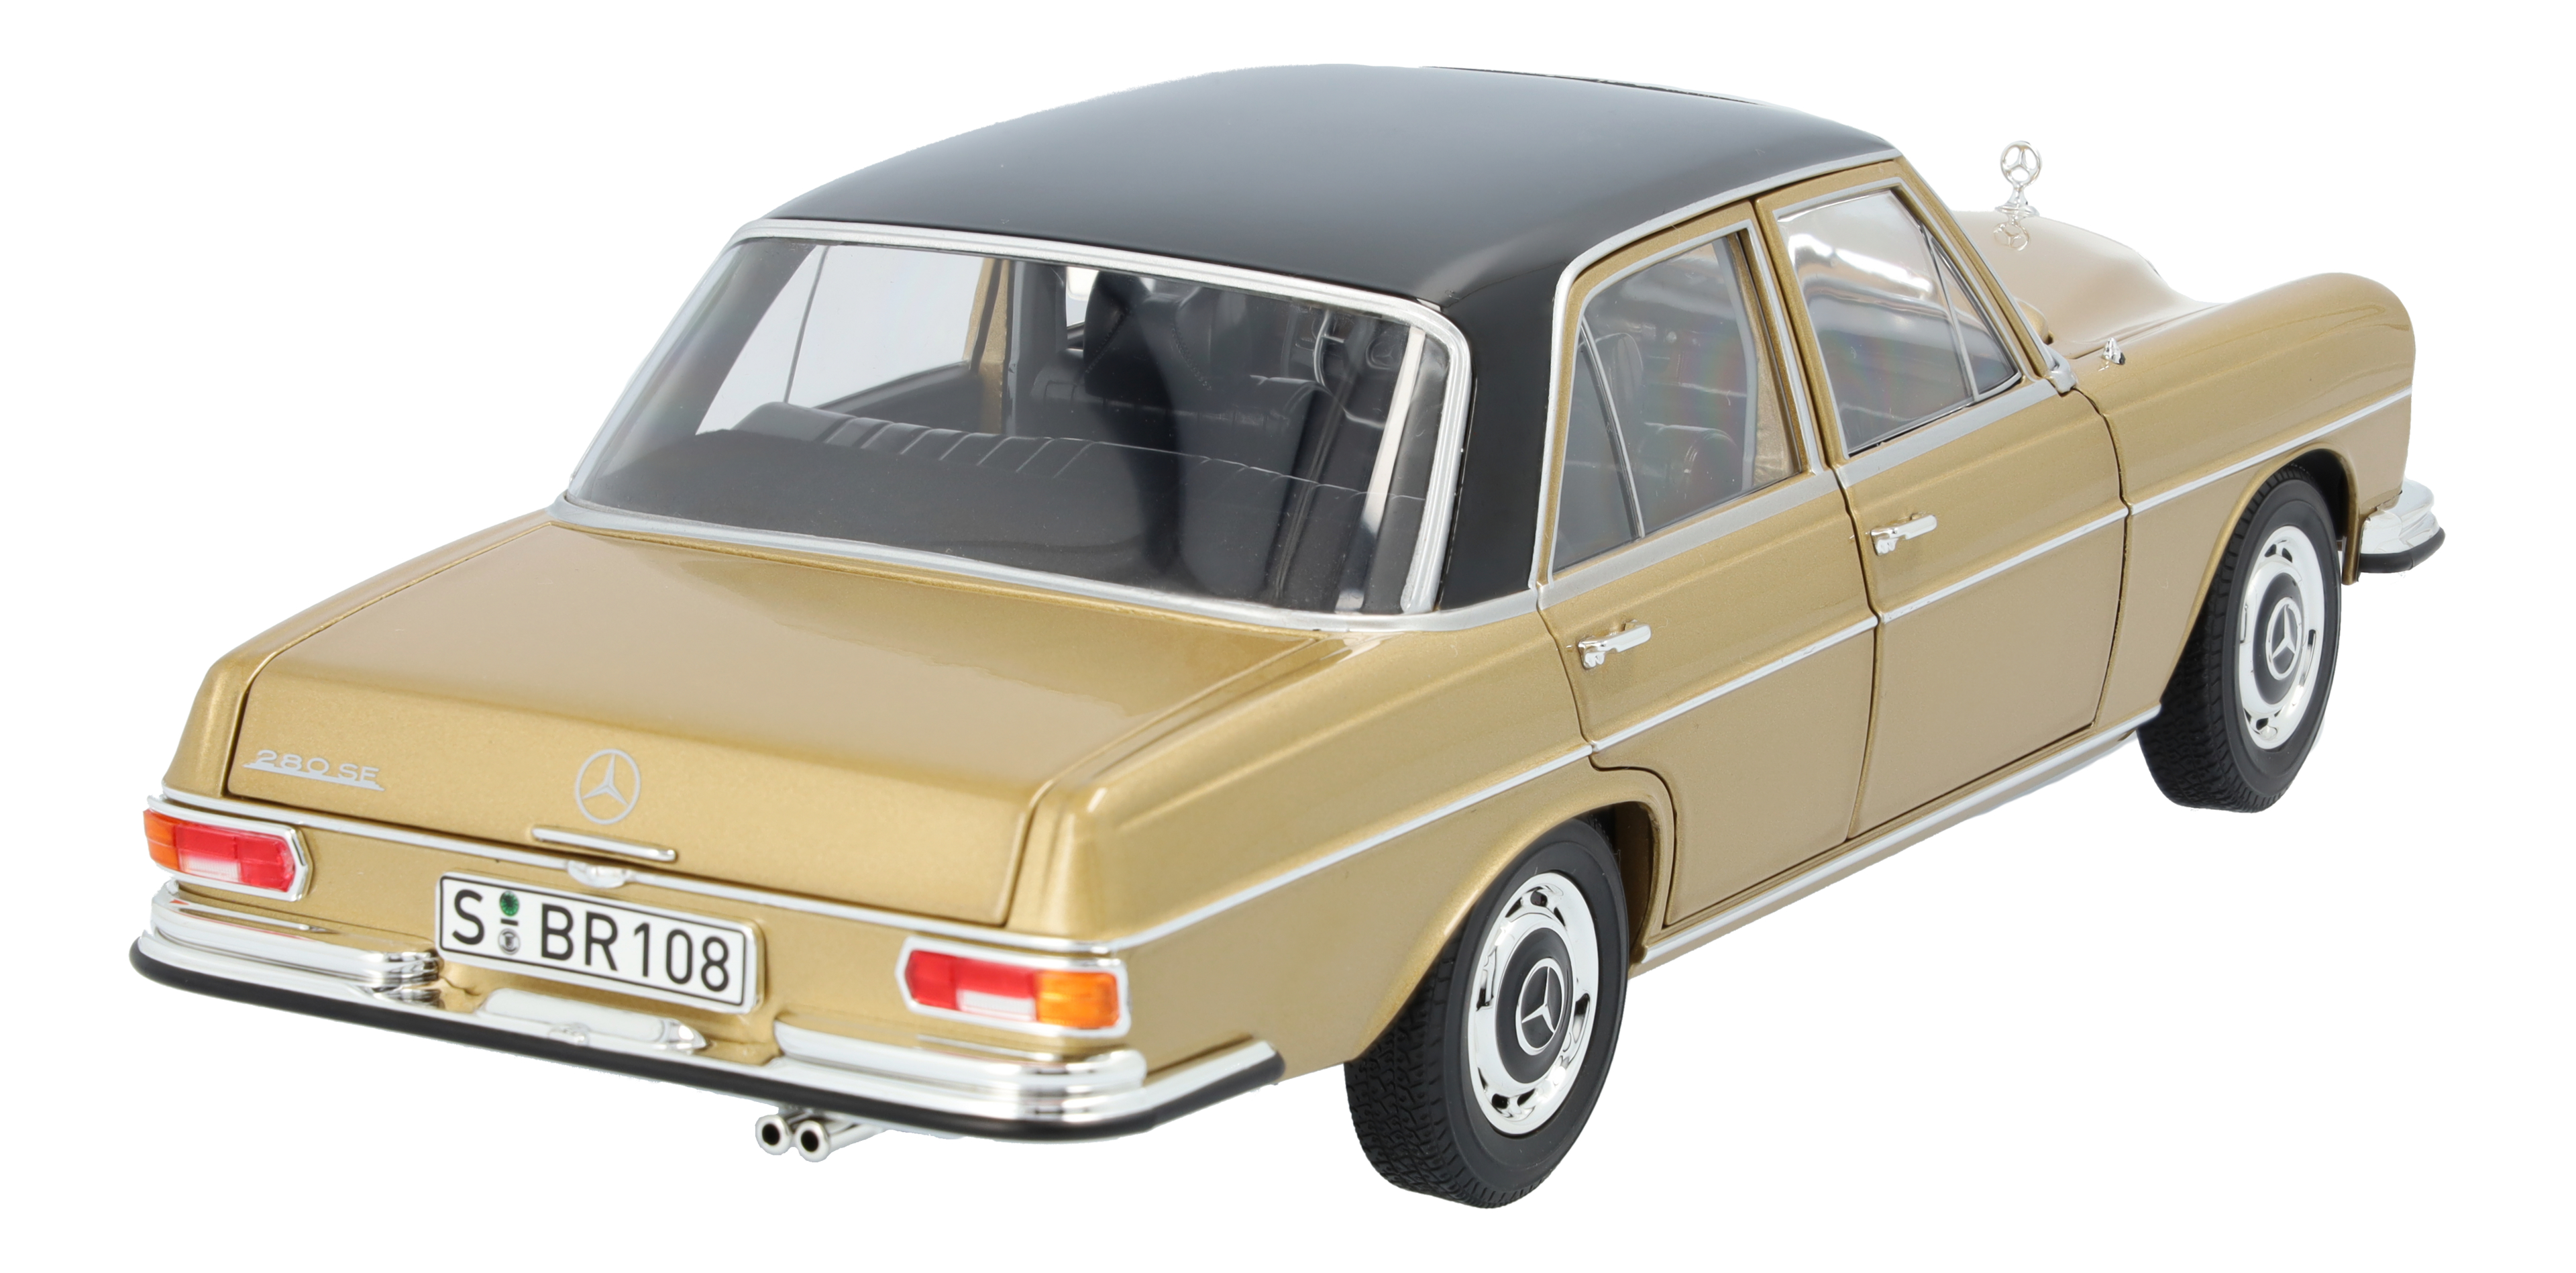 280 SE W 108 (1968-1972) - tunisbeige, Norev, 1:18